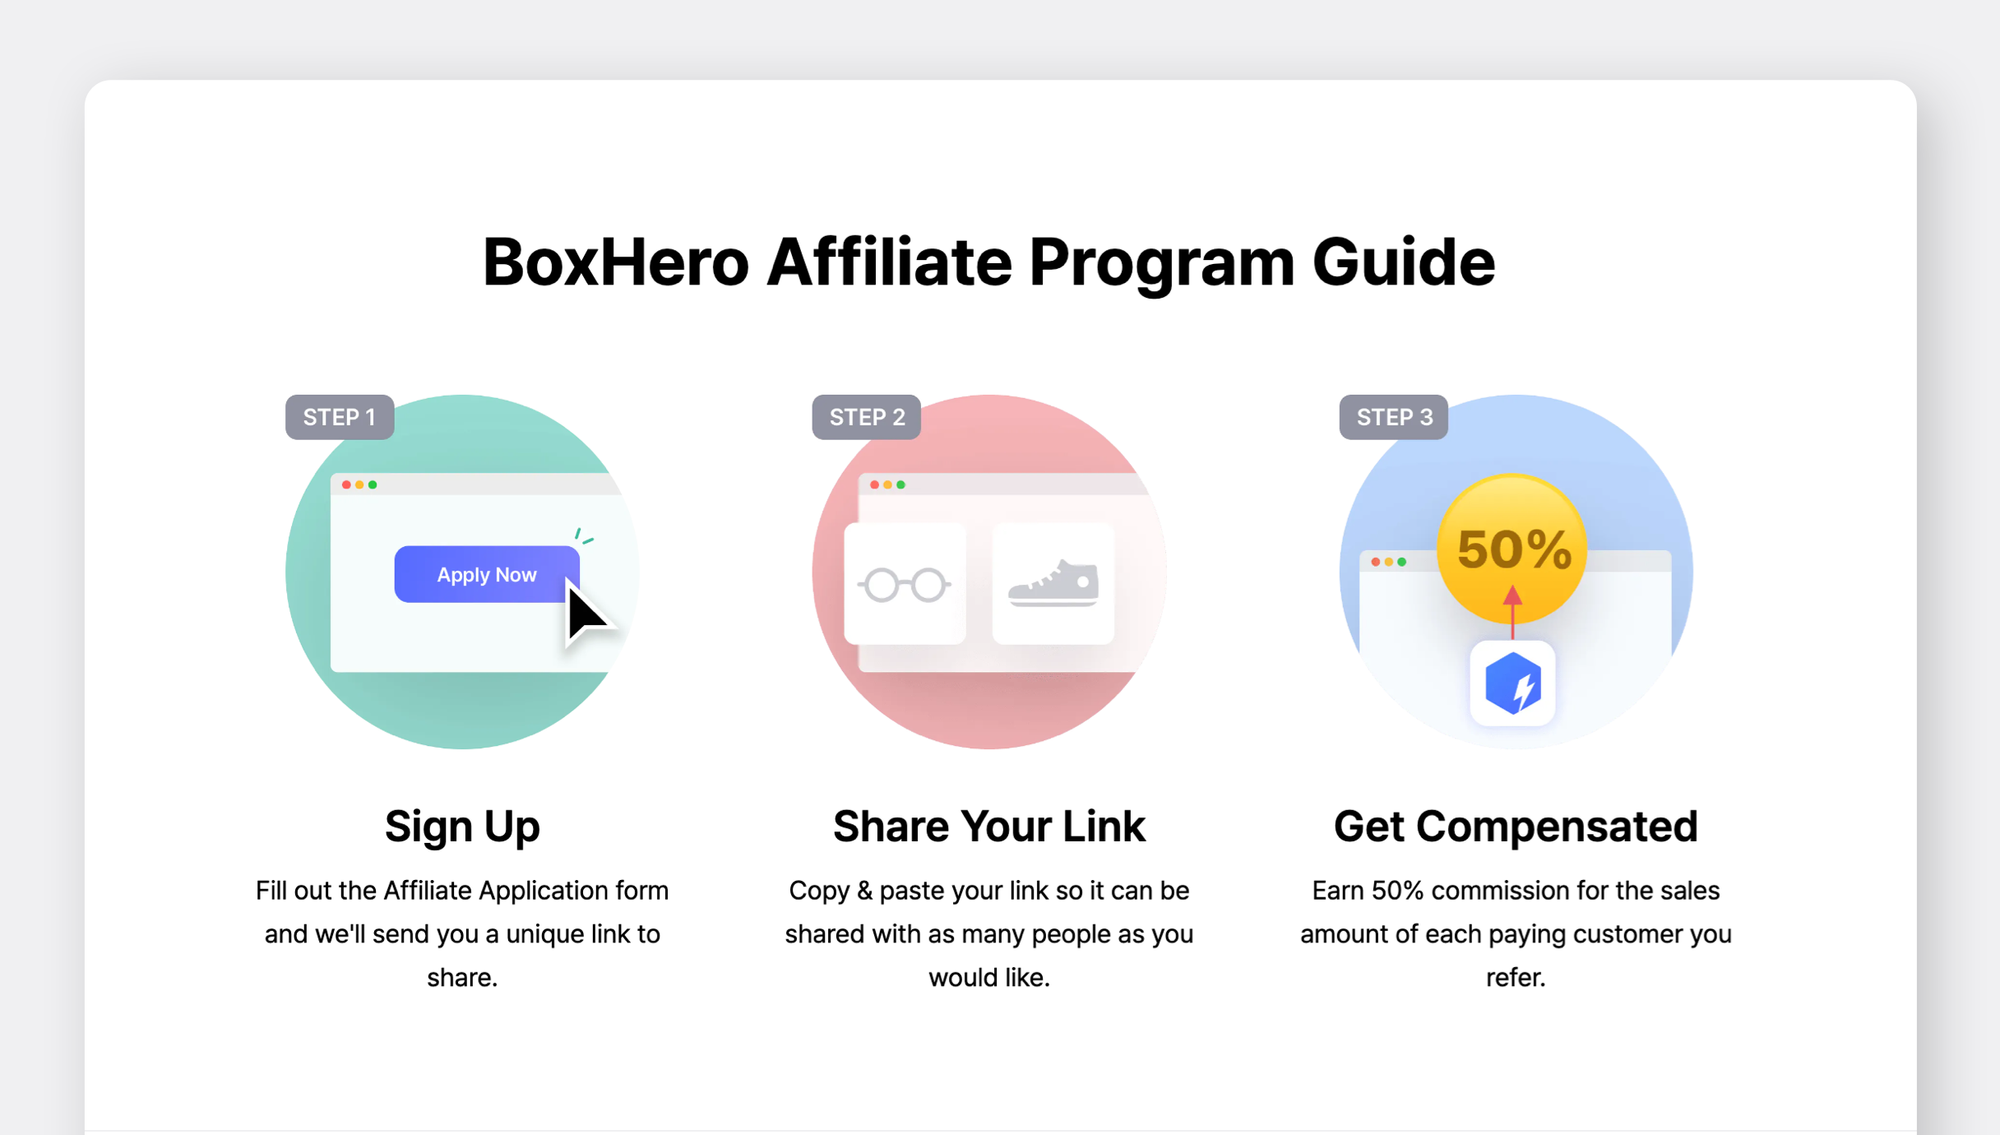 BoxHero affiliate program guide.